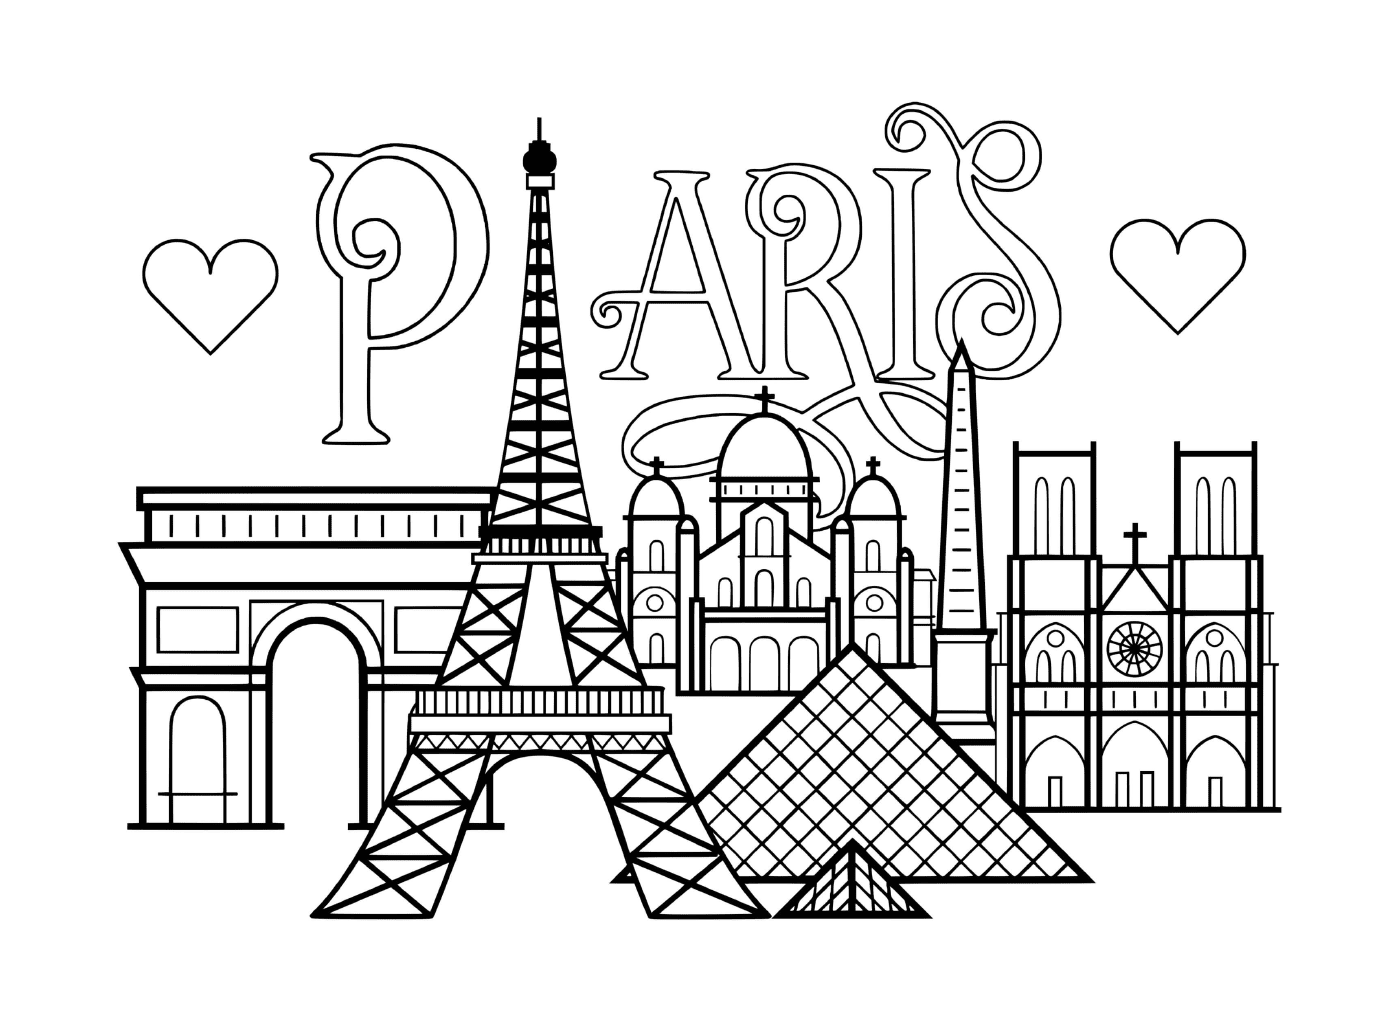  Città di Parigi, monumenti famosi 